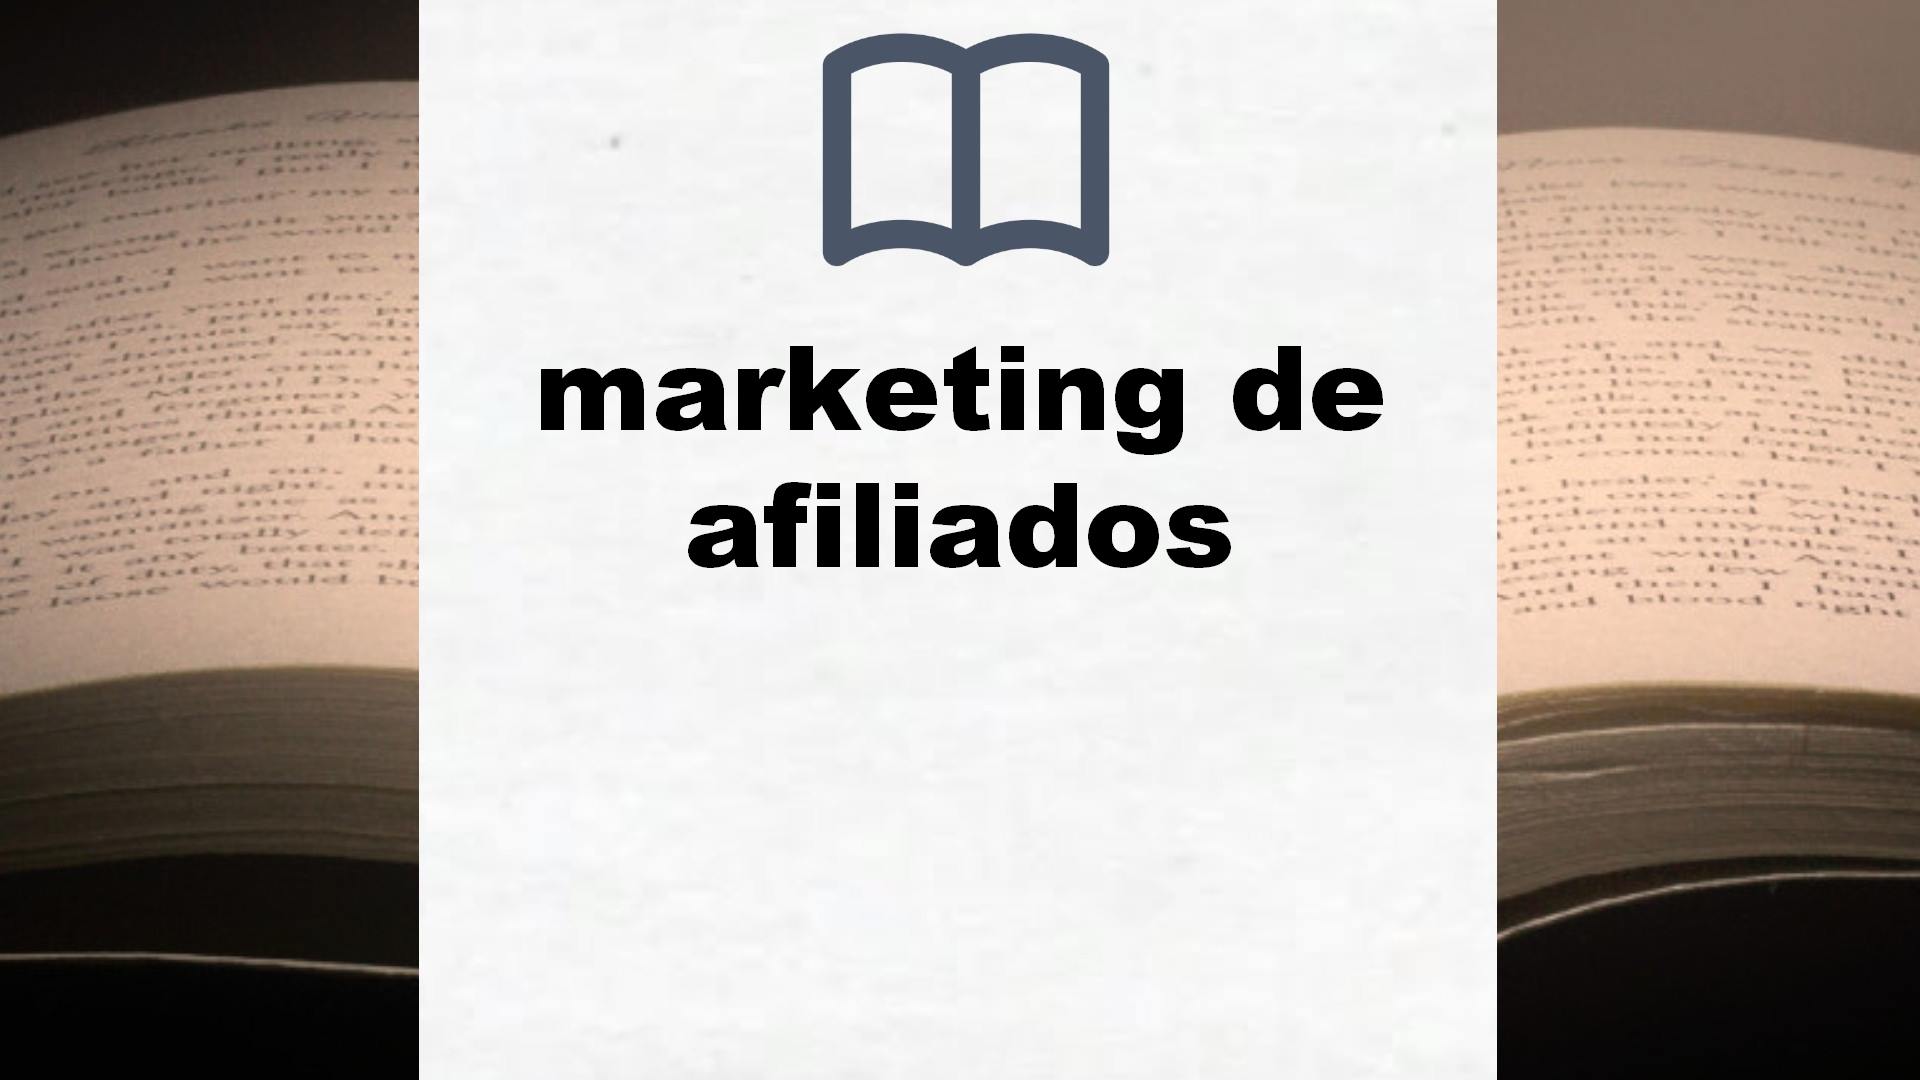 Libros sobre marketing de afiliados